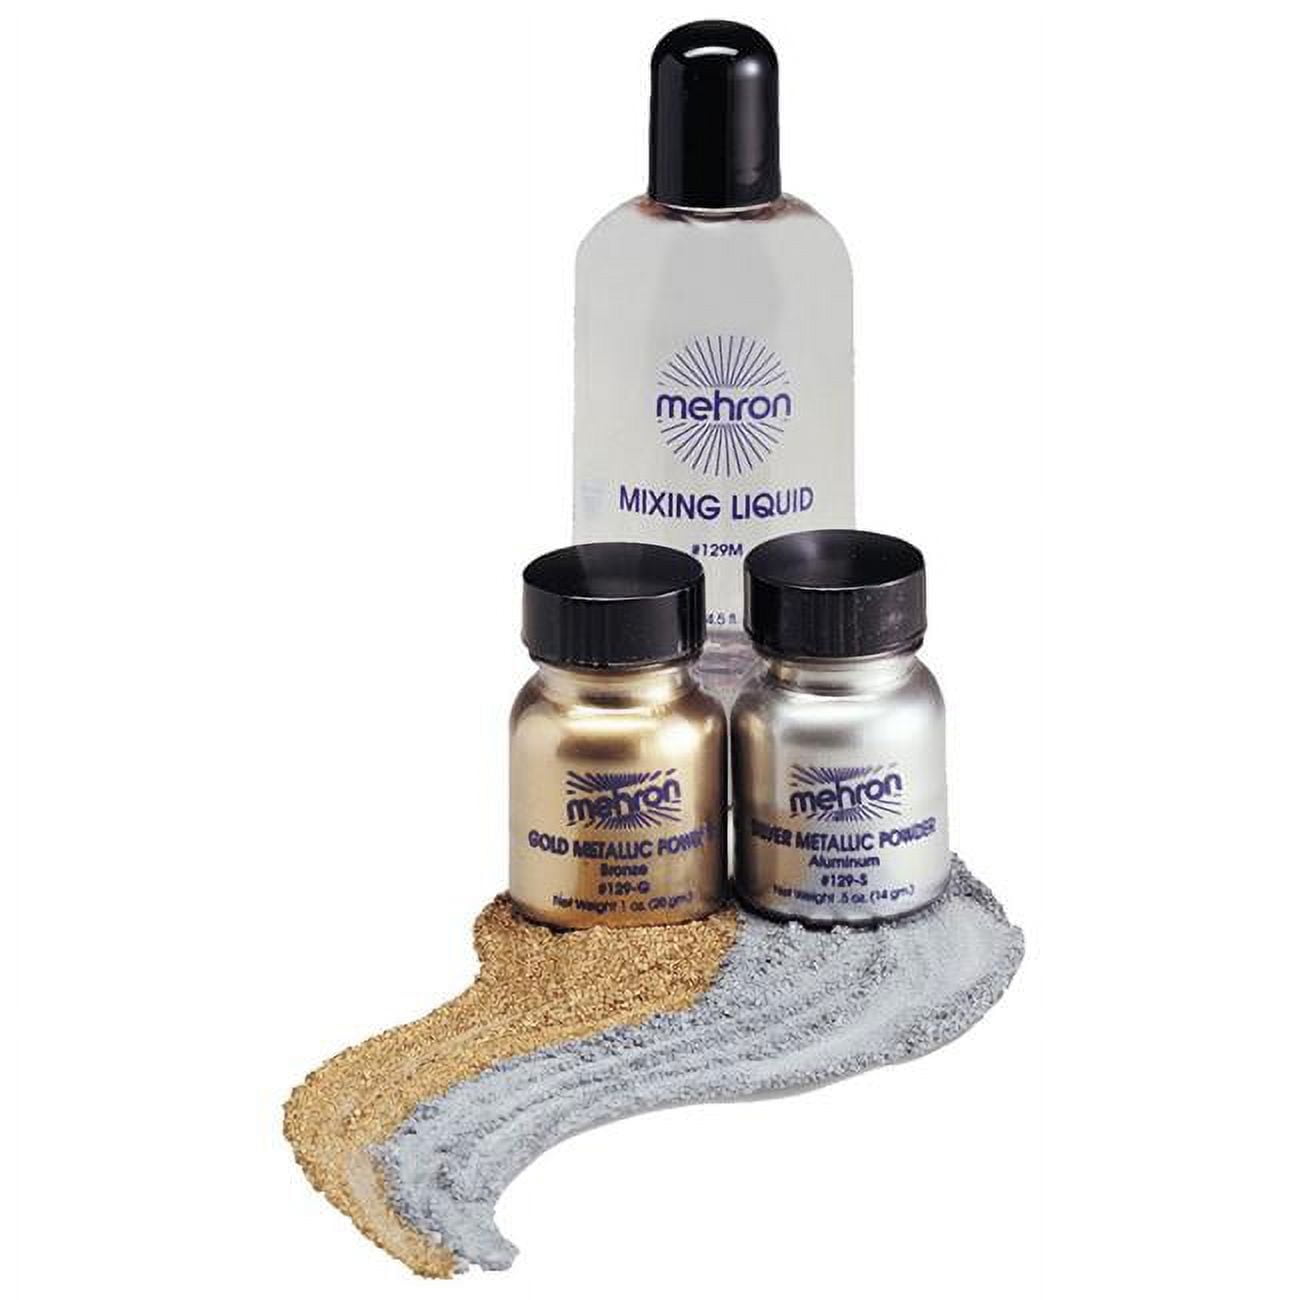 Mehron Makeup Metallic Powder (.17 oz) with Mixing Liquid (1 oz) (LAVENDER)